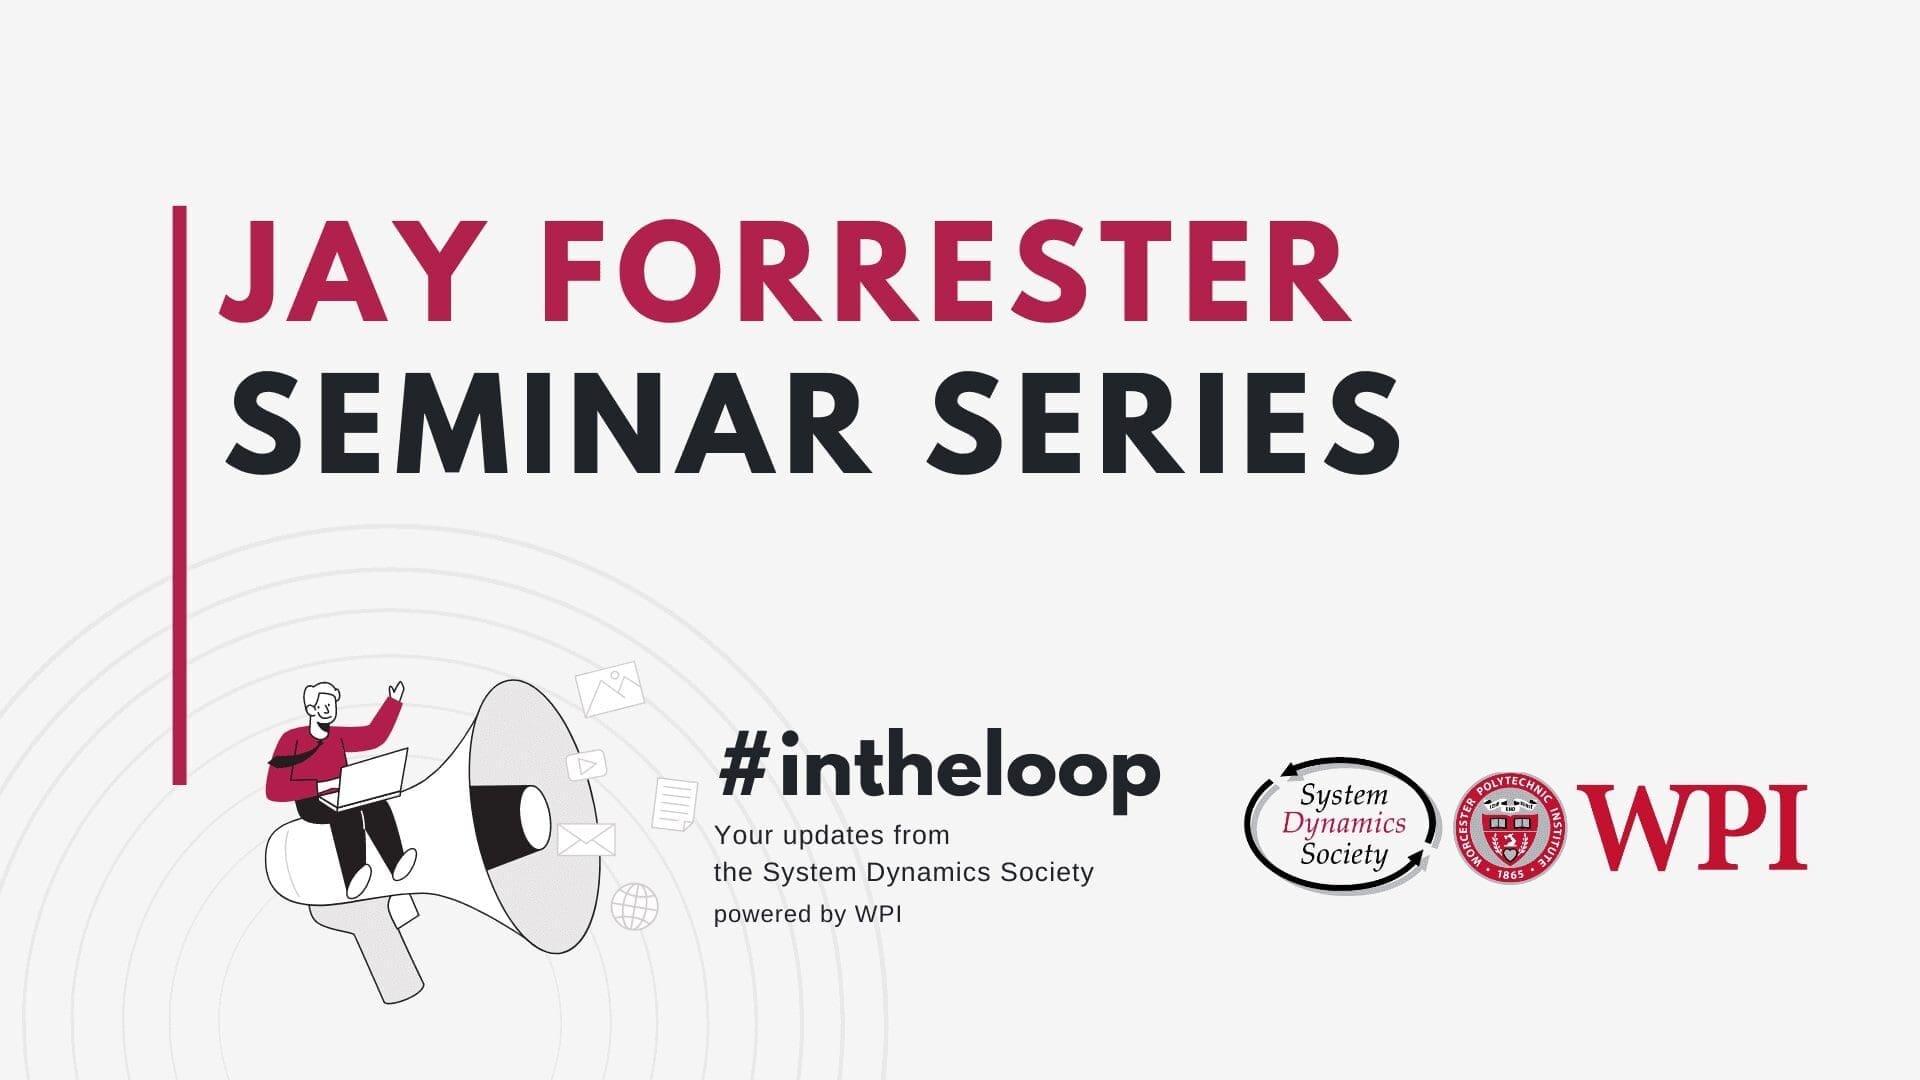 Jay Forrester Seminar Series #intheloop